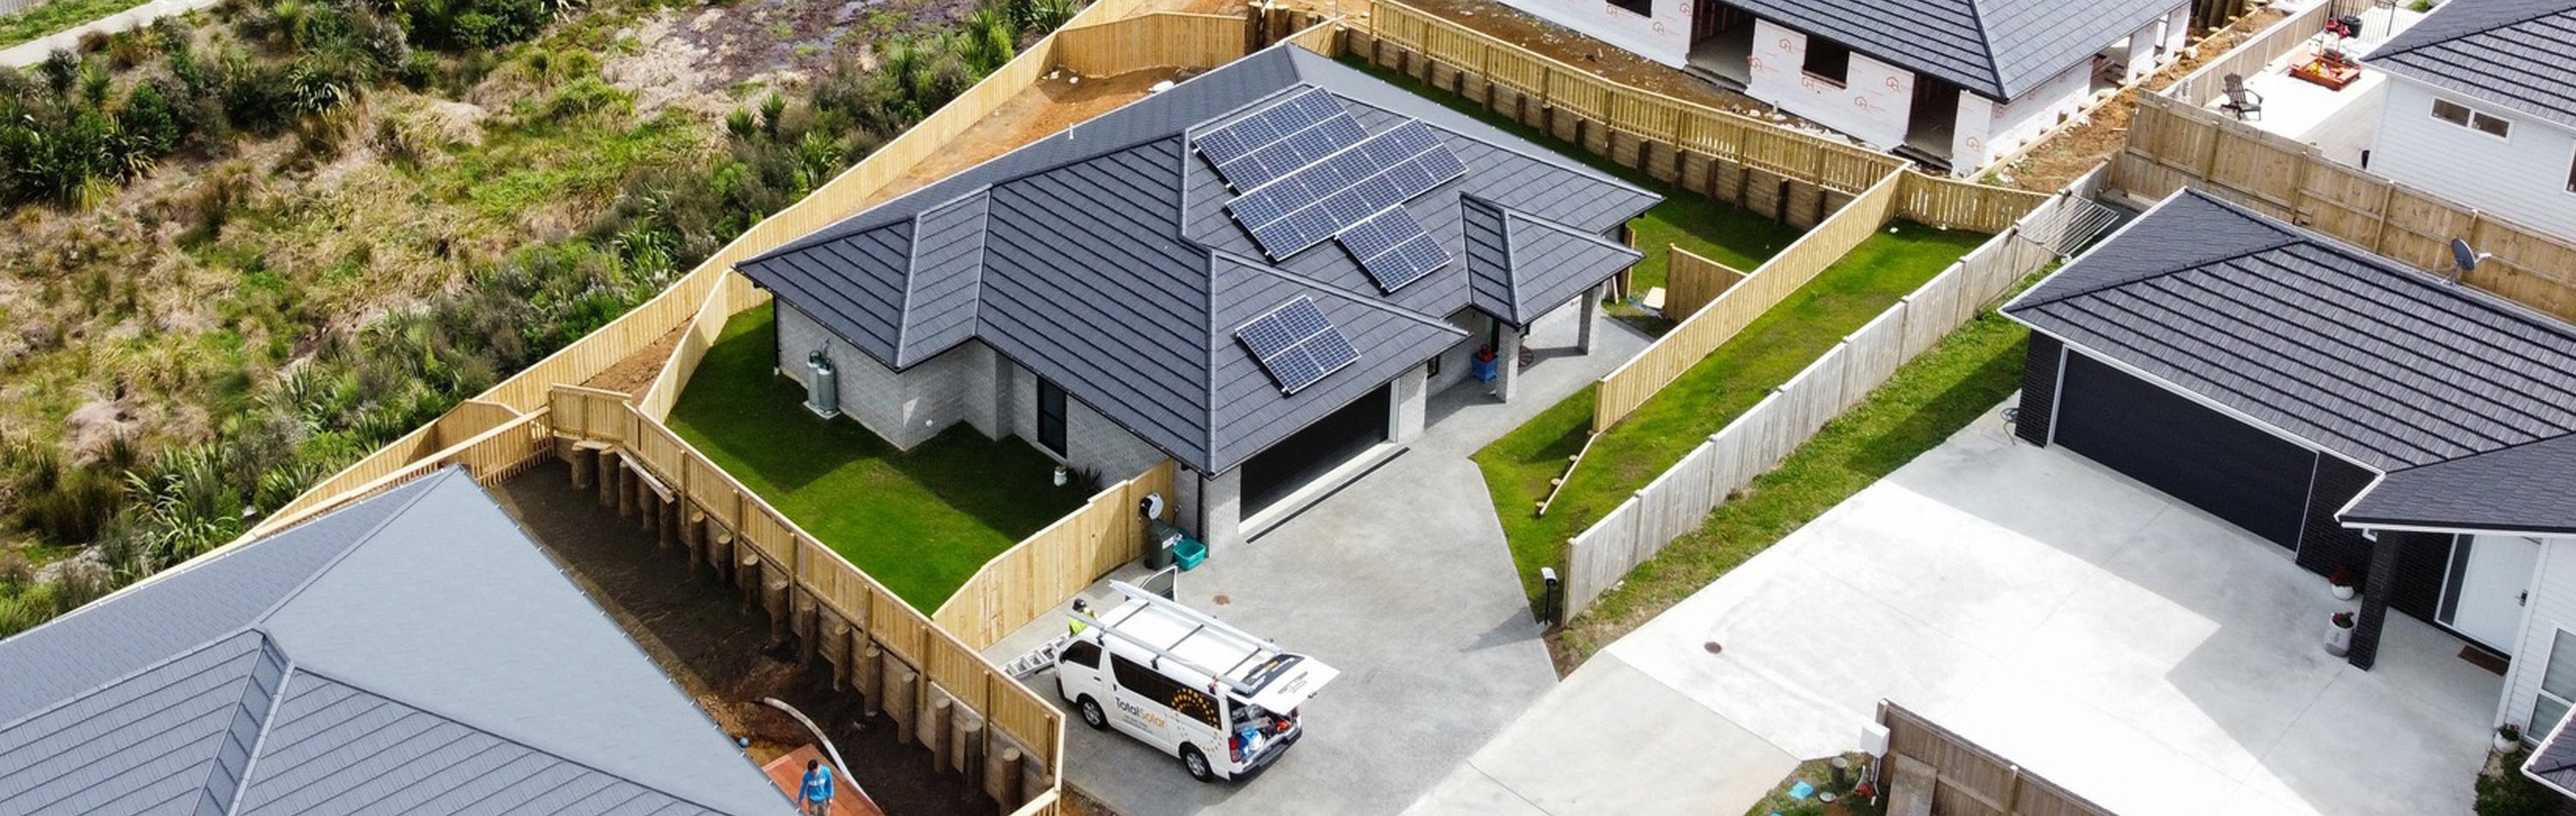 residential solar panel installation auckland